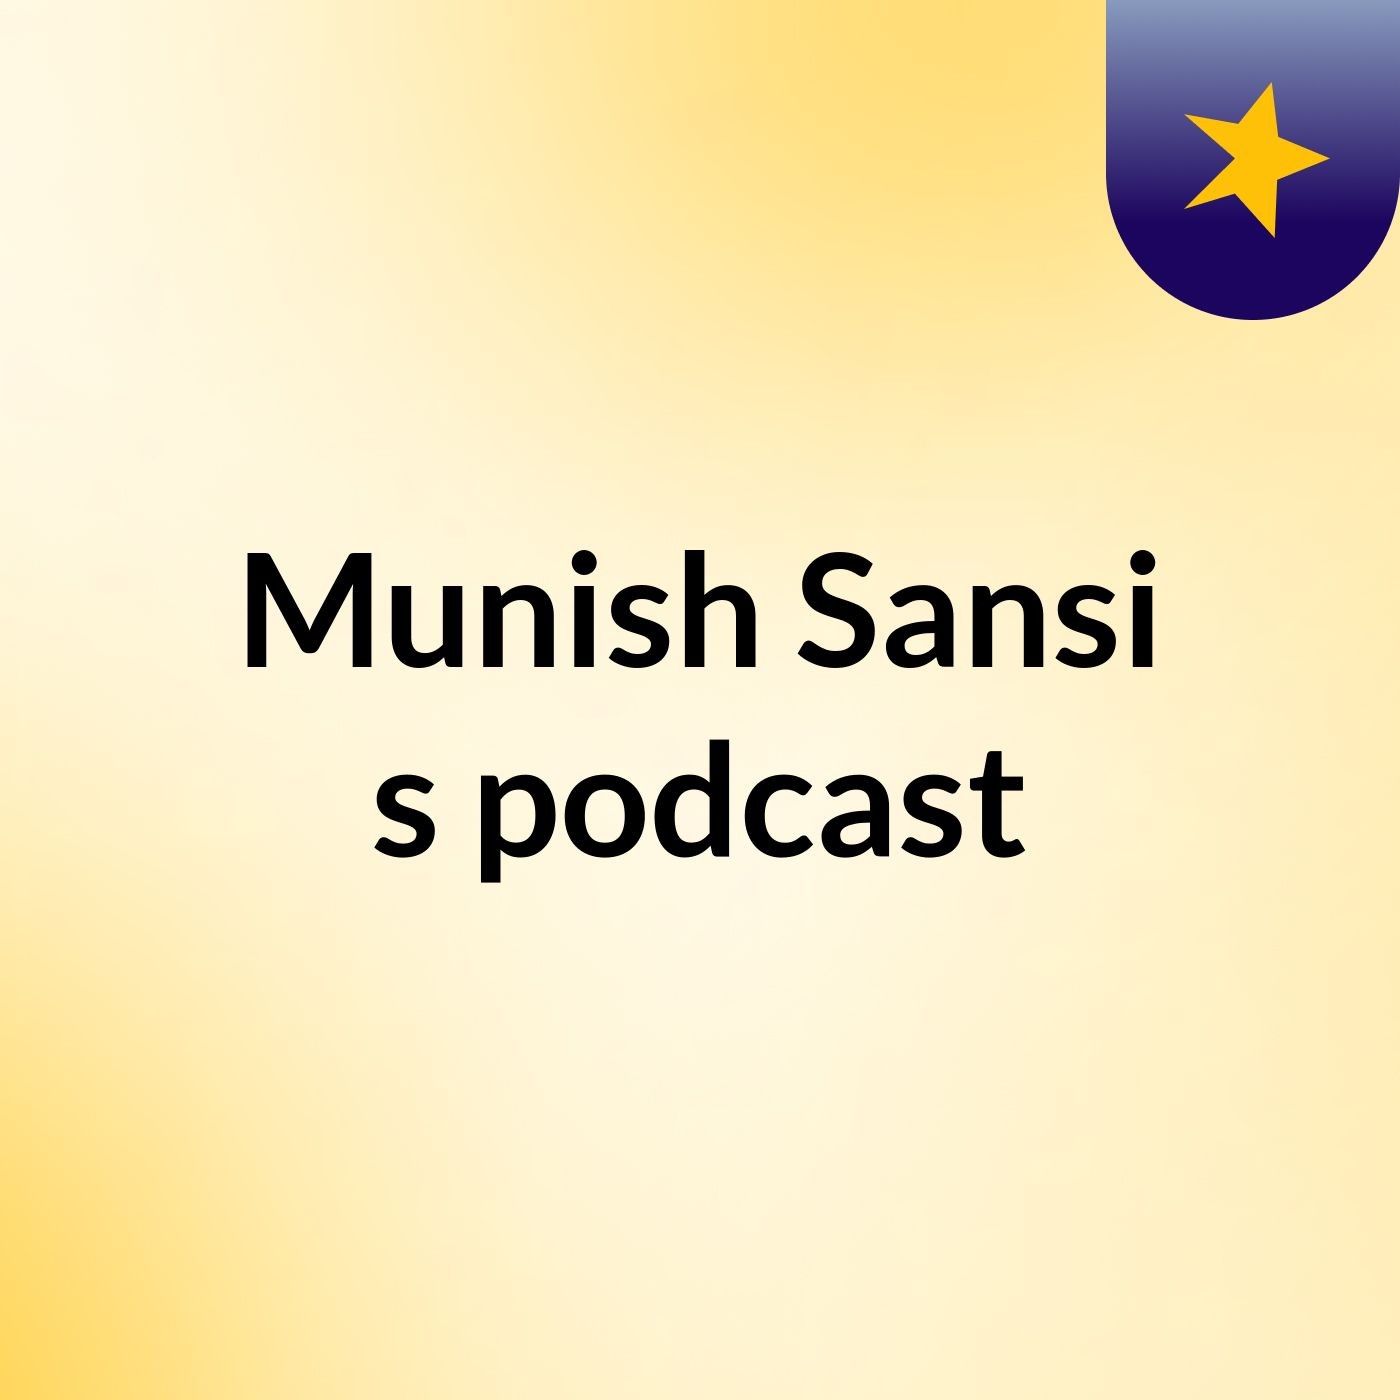 Munish Sansi's podcast